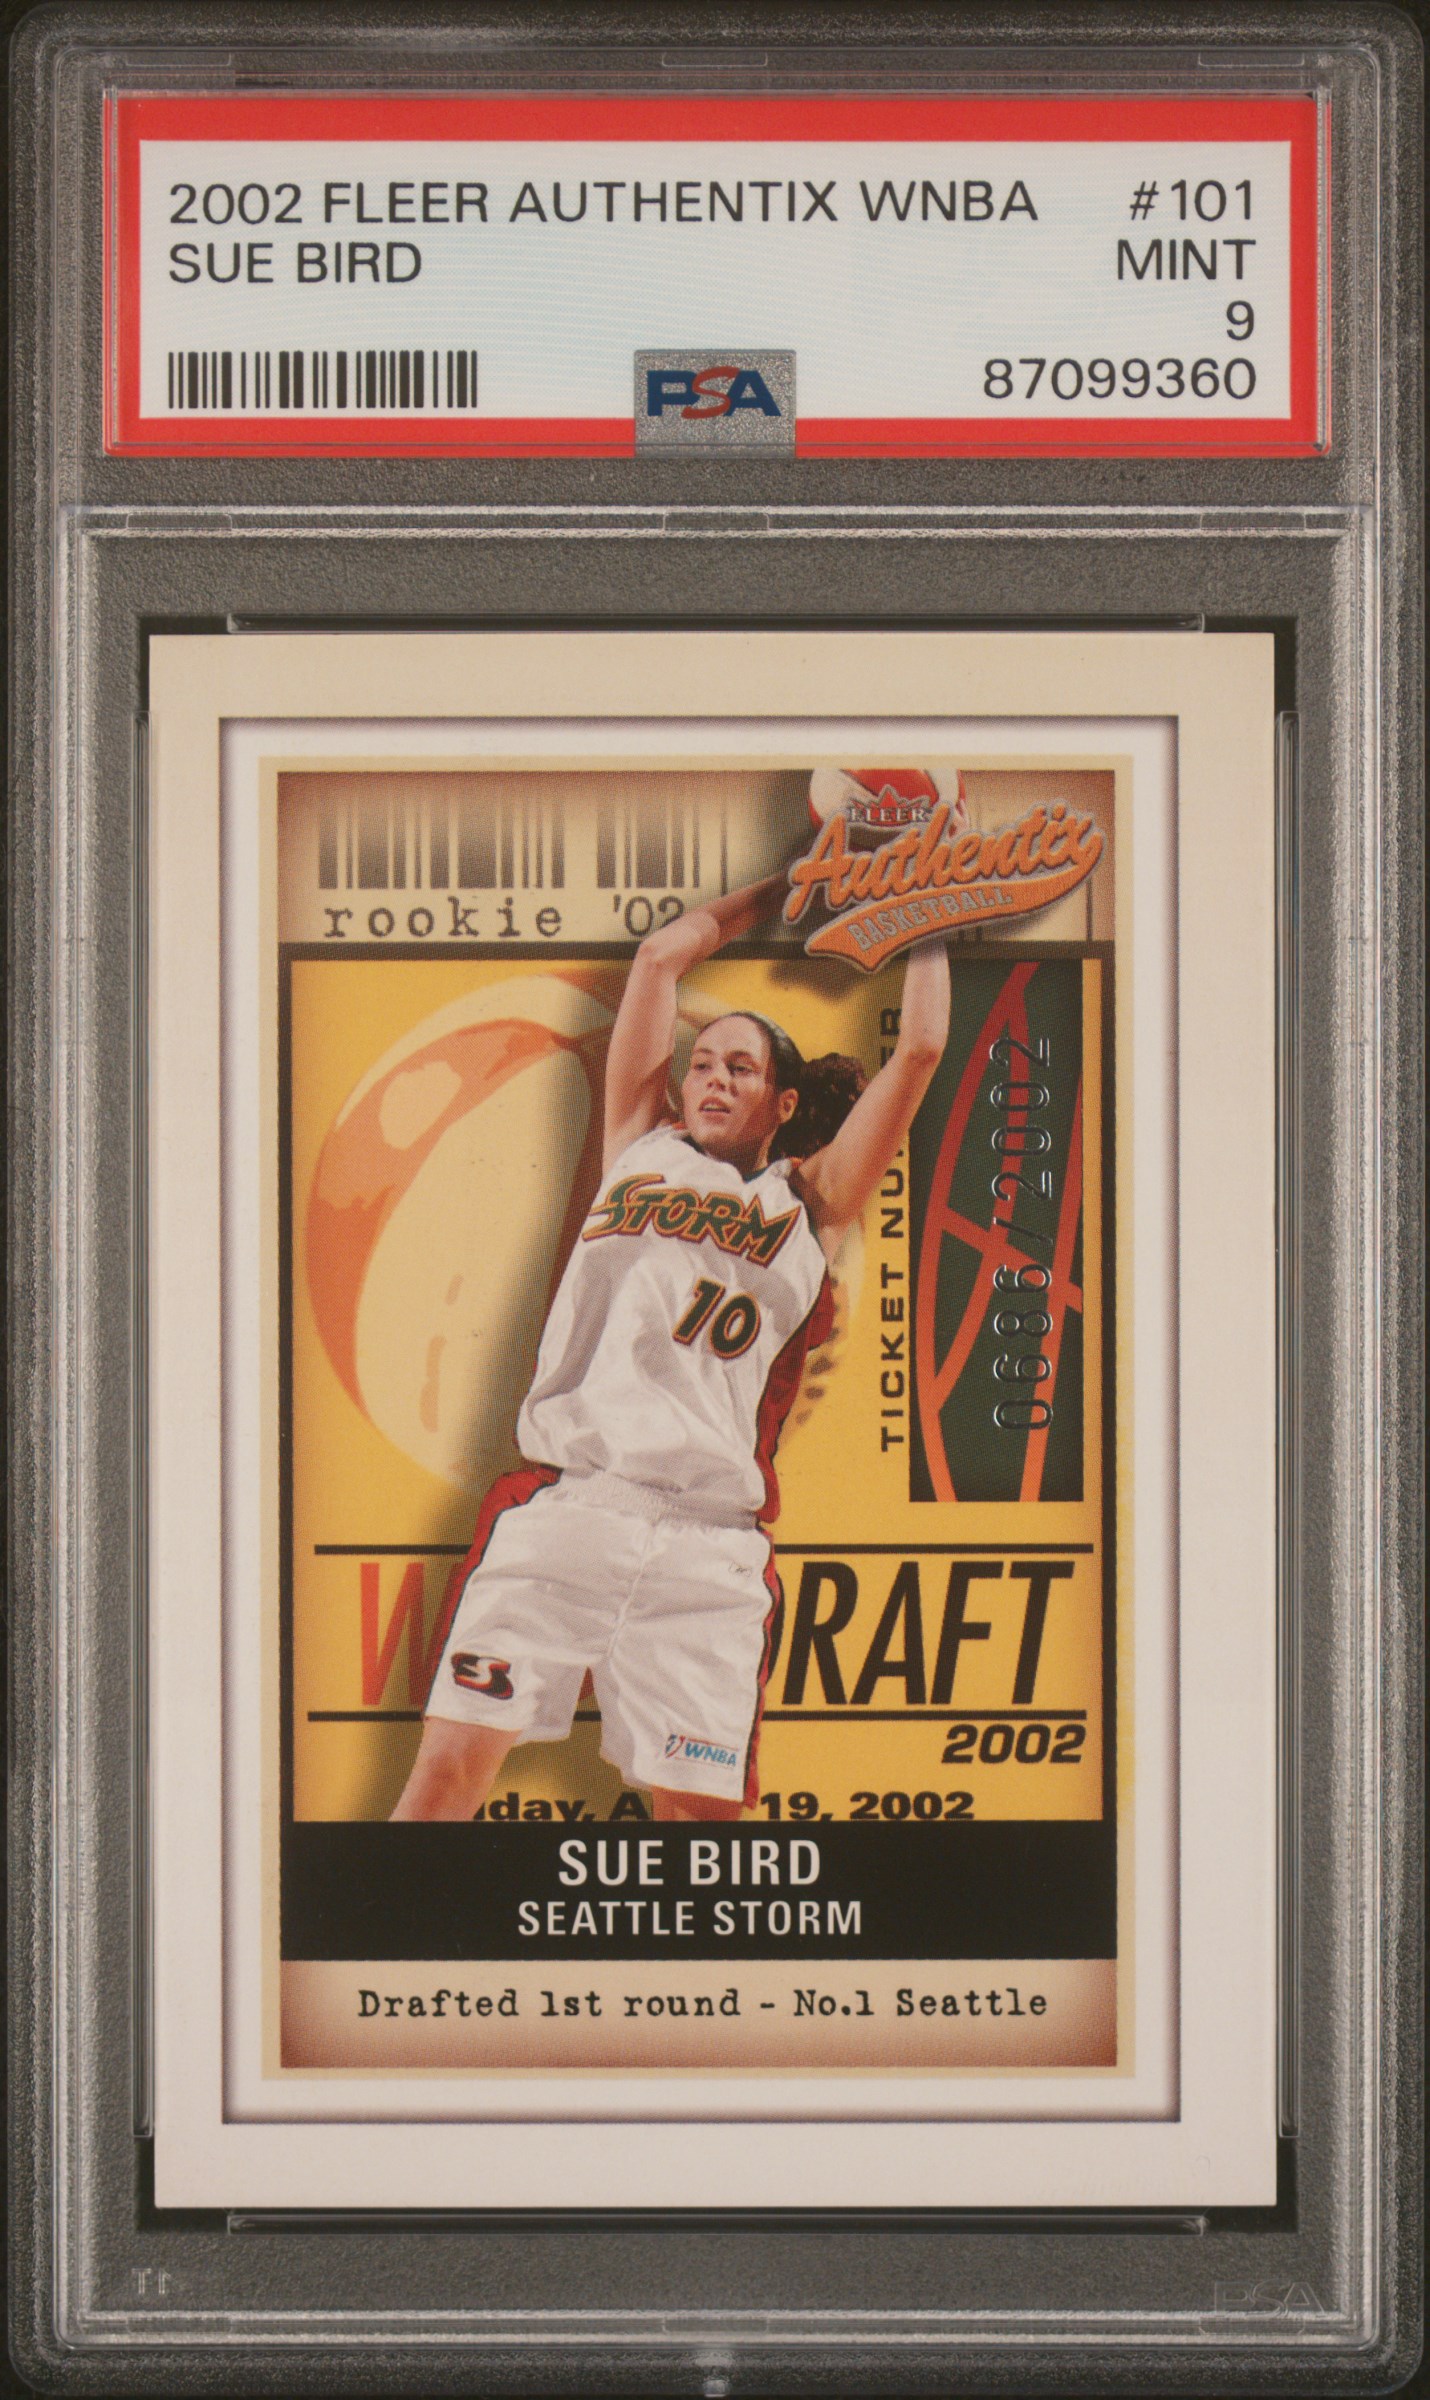 2002 Fleer Authentix WNBA #101 Sue Bird Rookie Card (#0686/2002) – PSA MINT 9